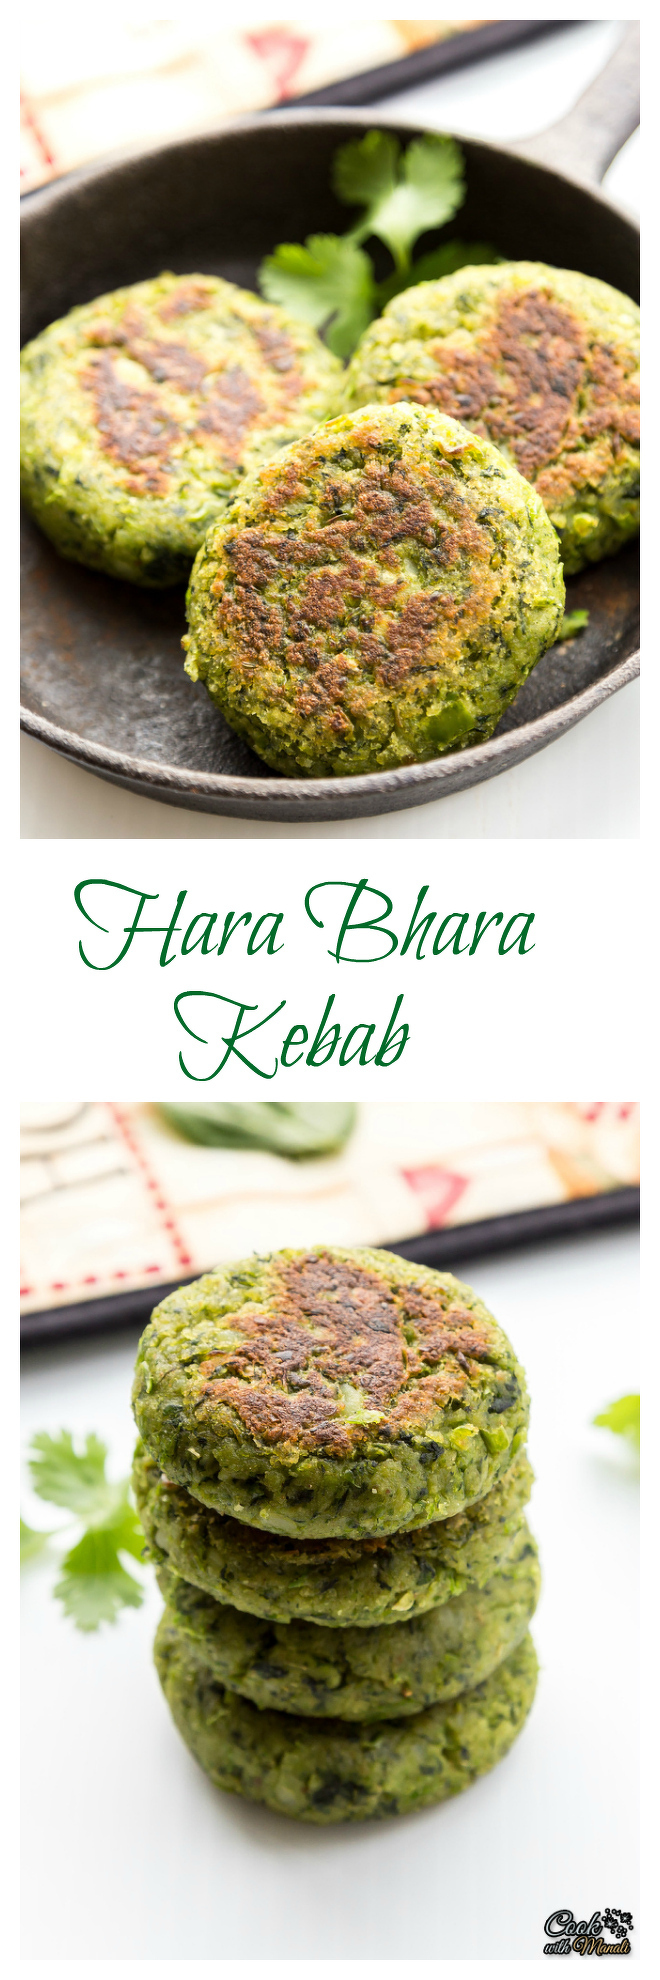 Hara-Bhara-Kebab-Collage-nocwm